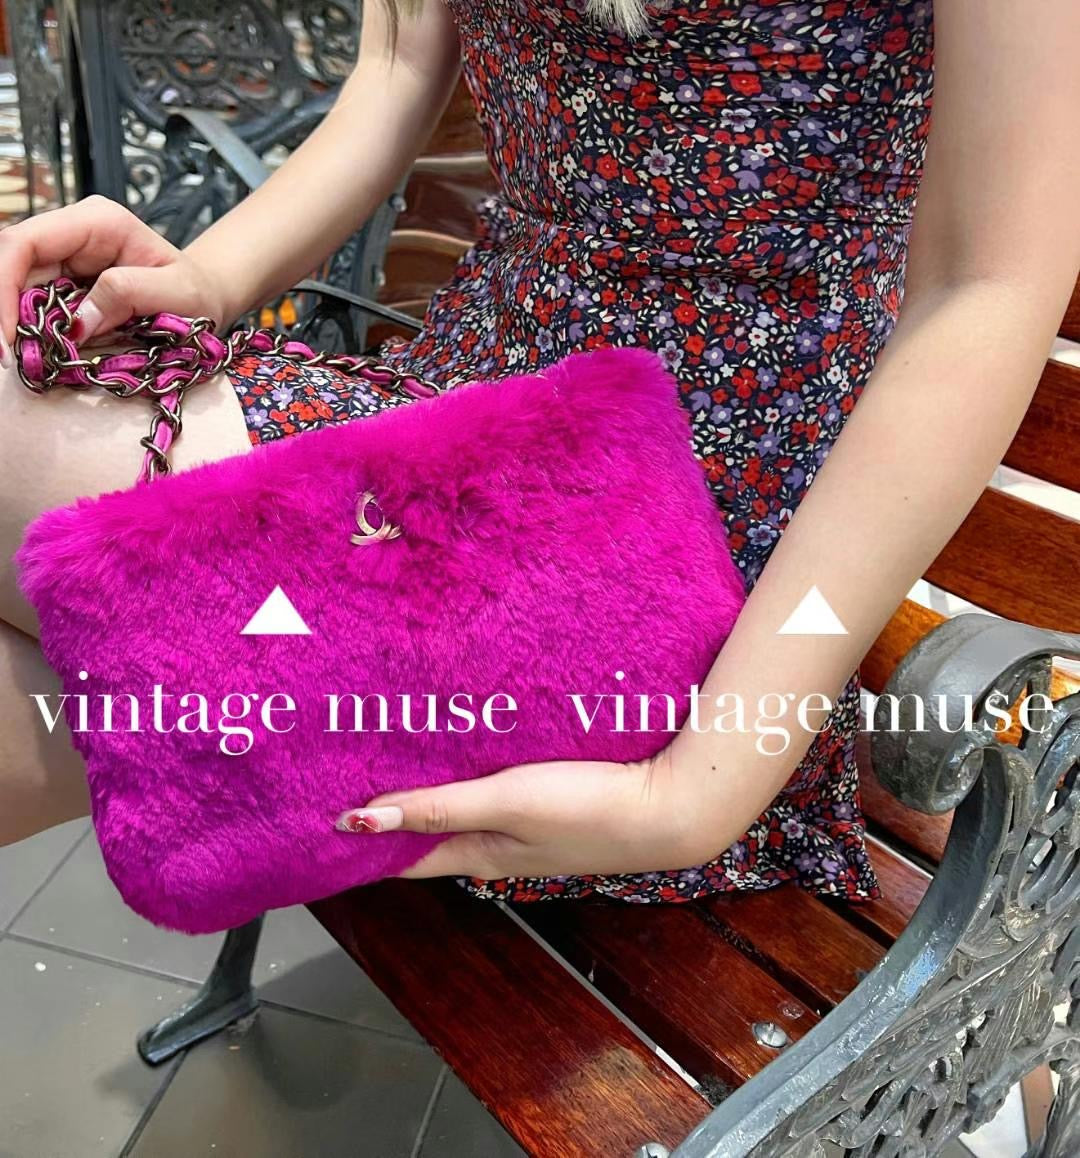 Pre-loved Chanel Fuchsia Pink Rabbit Fur Chain Shoulder Bag